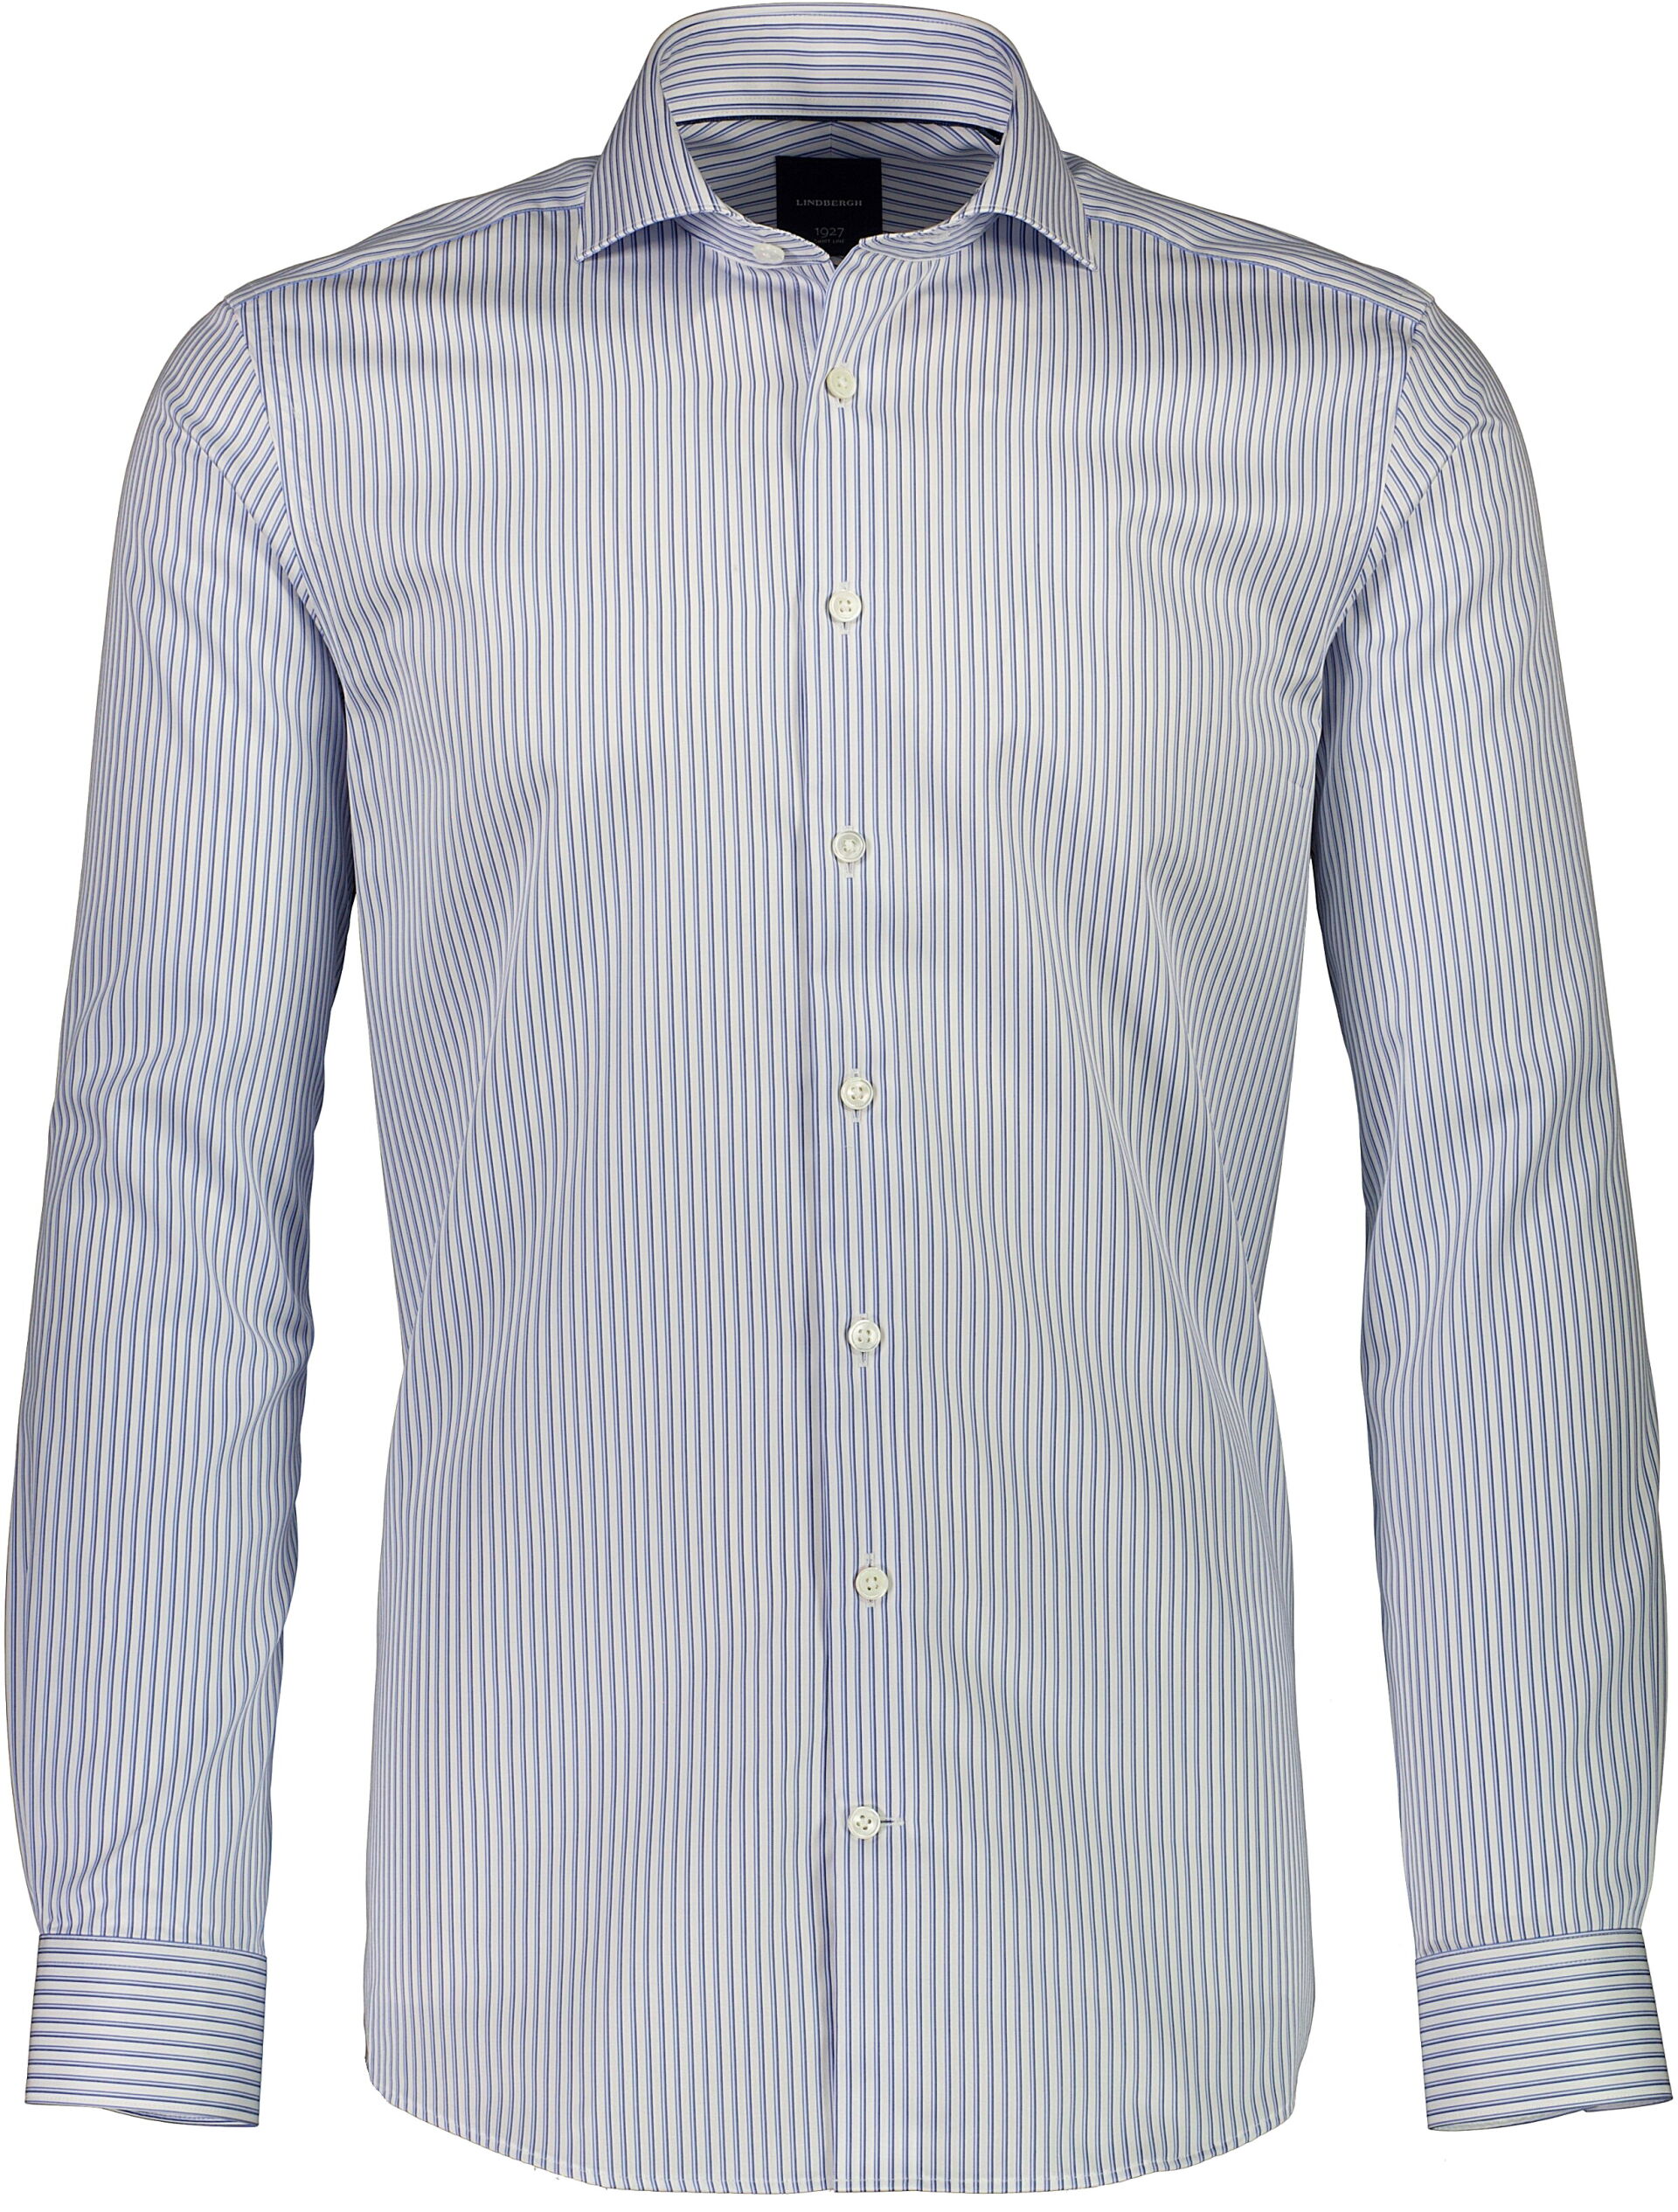 1927 Business casual shirt 30-247108